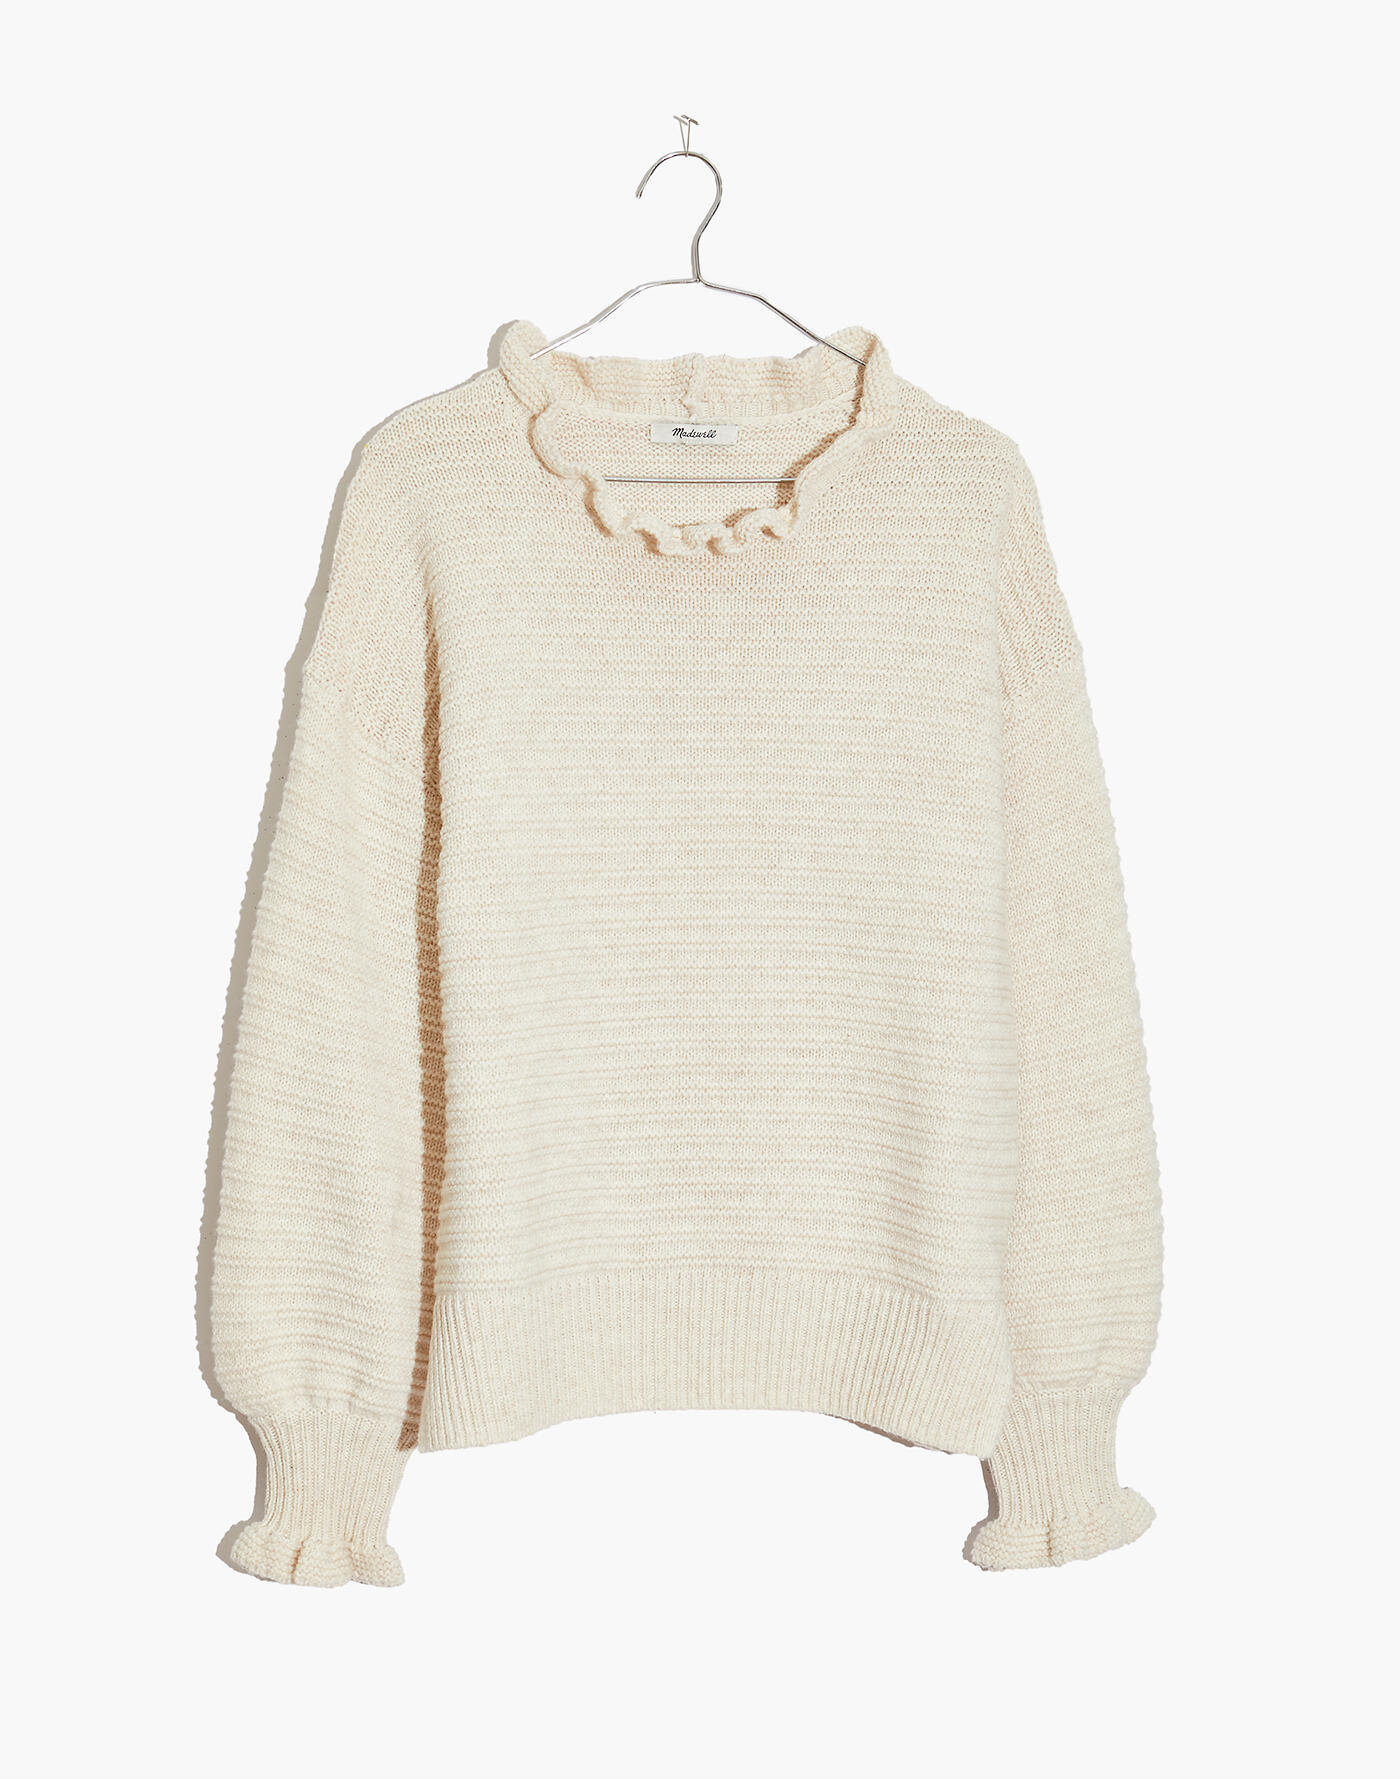 Ruffle-Neck Pullover Sweater in Cotton-Merino Yarn.jpg